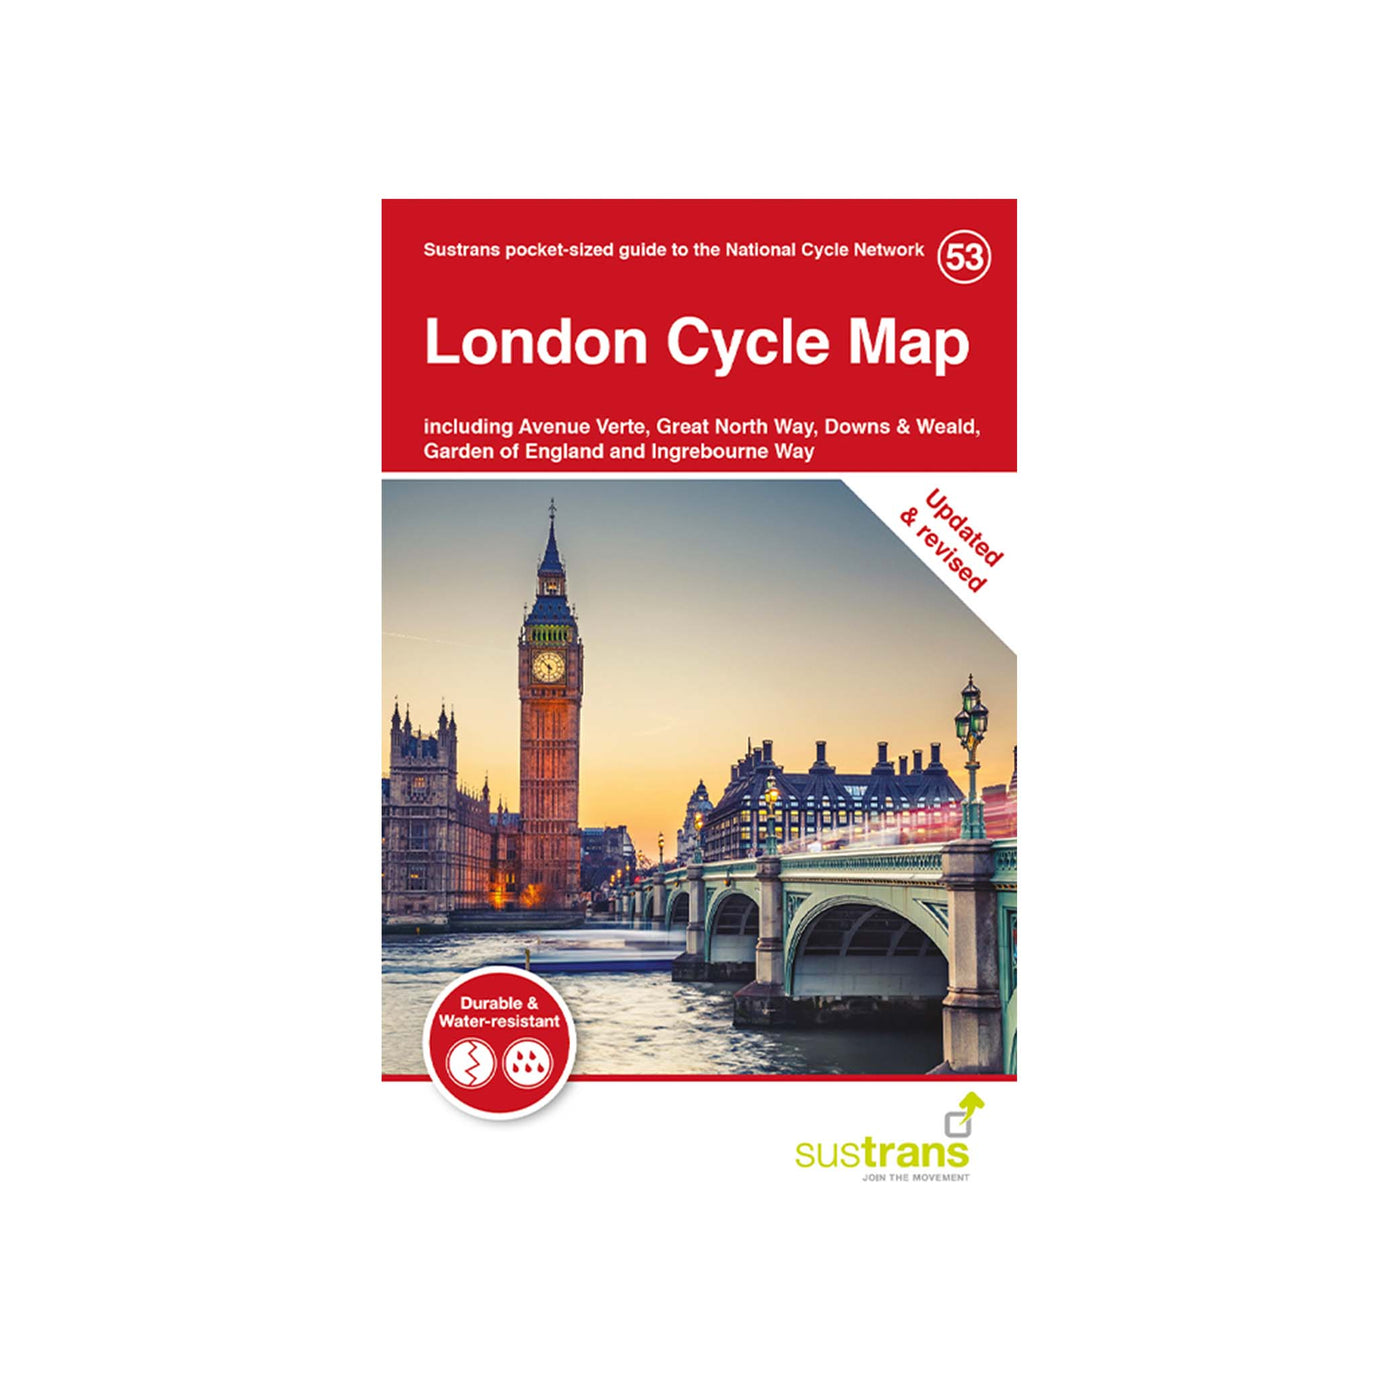 Sustrans London Cycle Map (53)